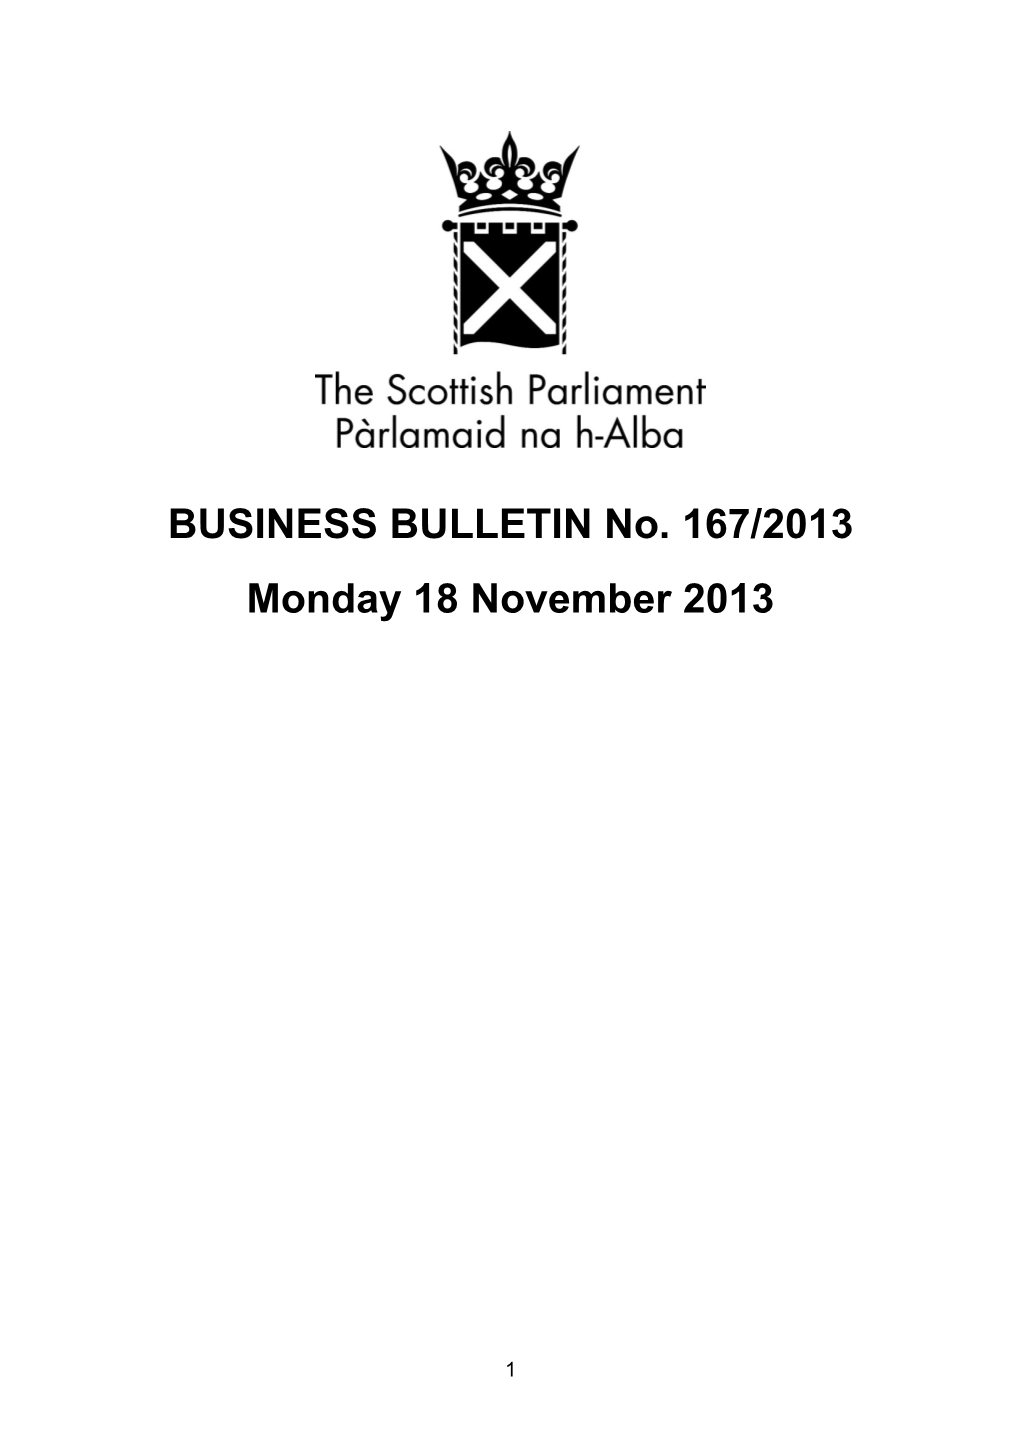 BUSINESS BULLETIN No. 167/2013 Monday 18 November 2013